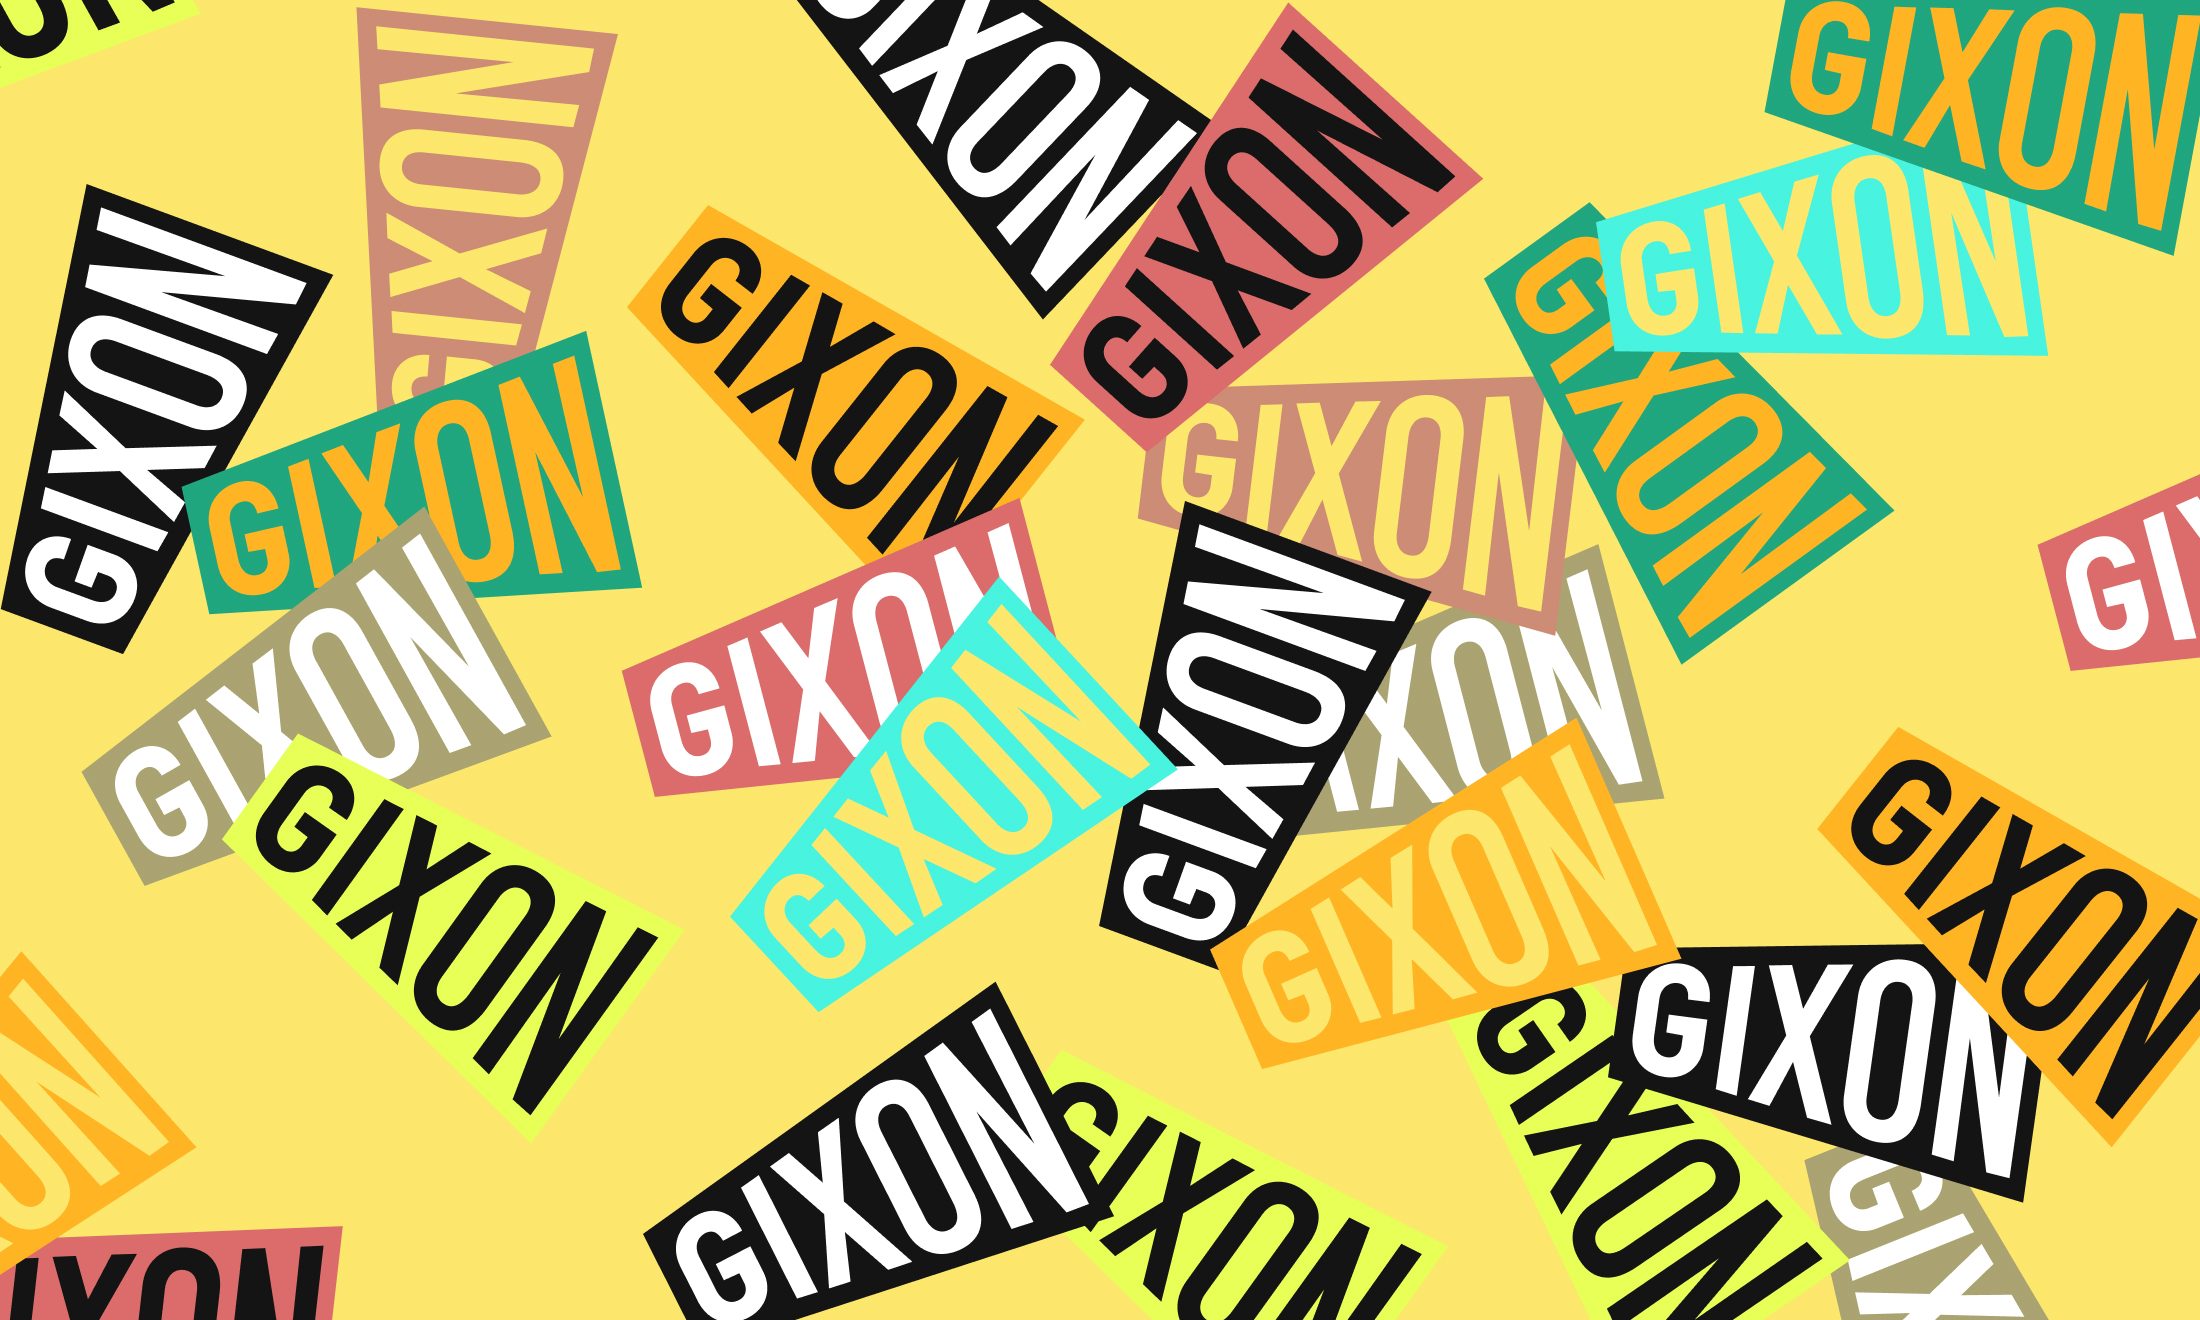 Gixon logo stickers